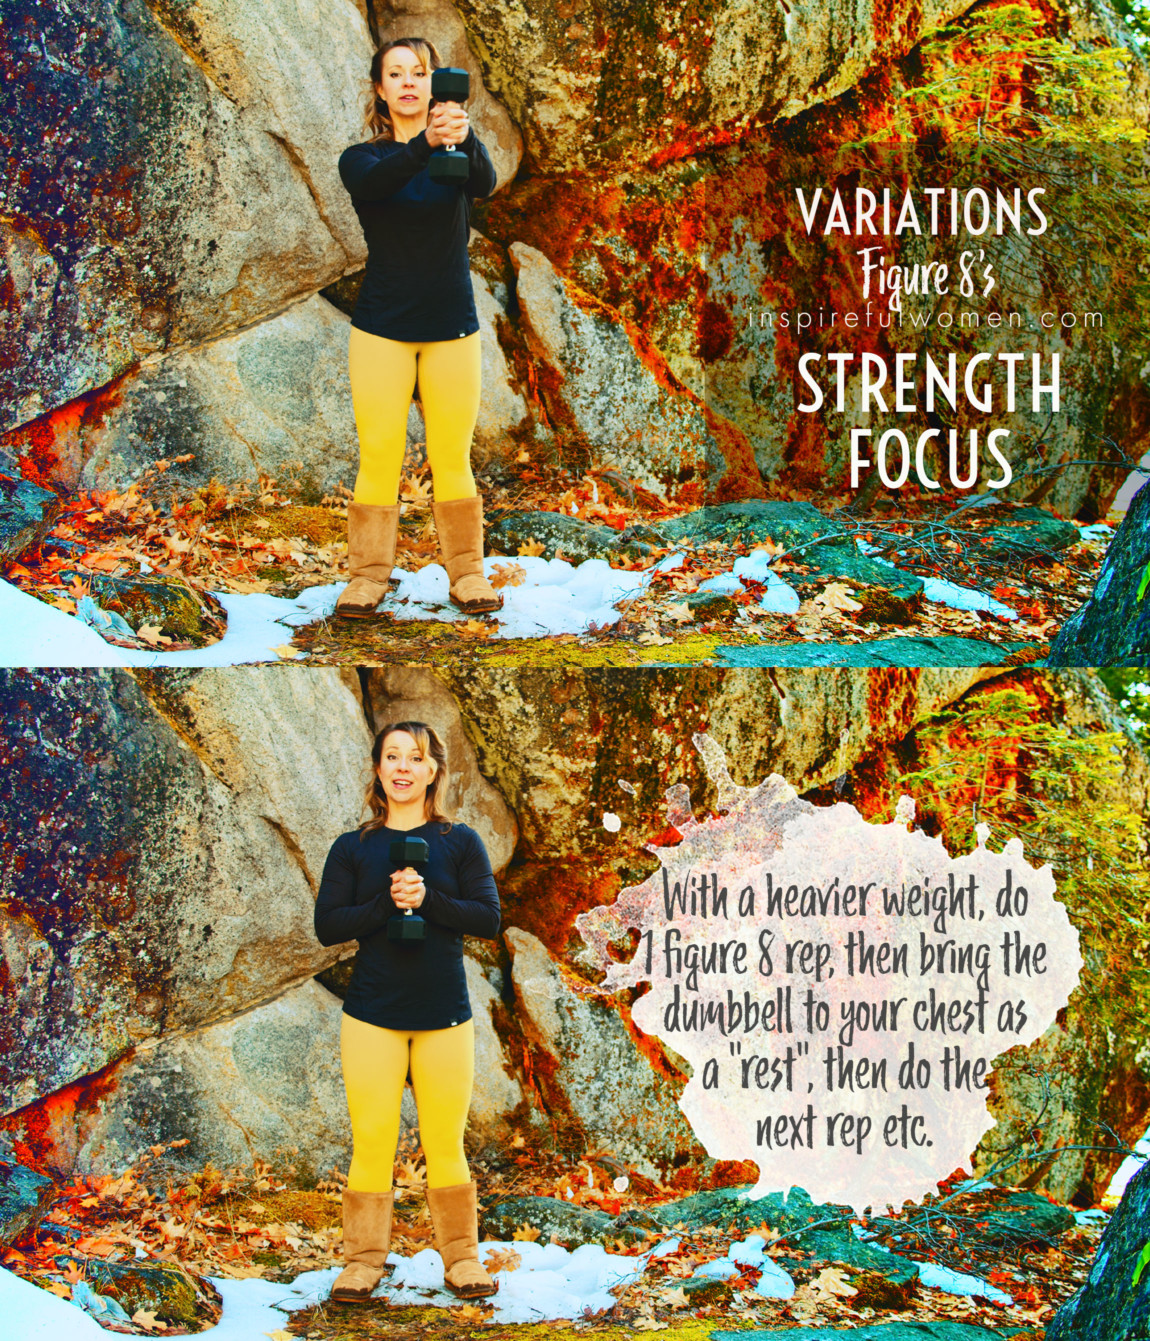 strength-focus-dumbbell-figure-8-shoulder-exercise-variation